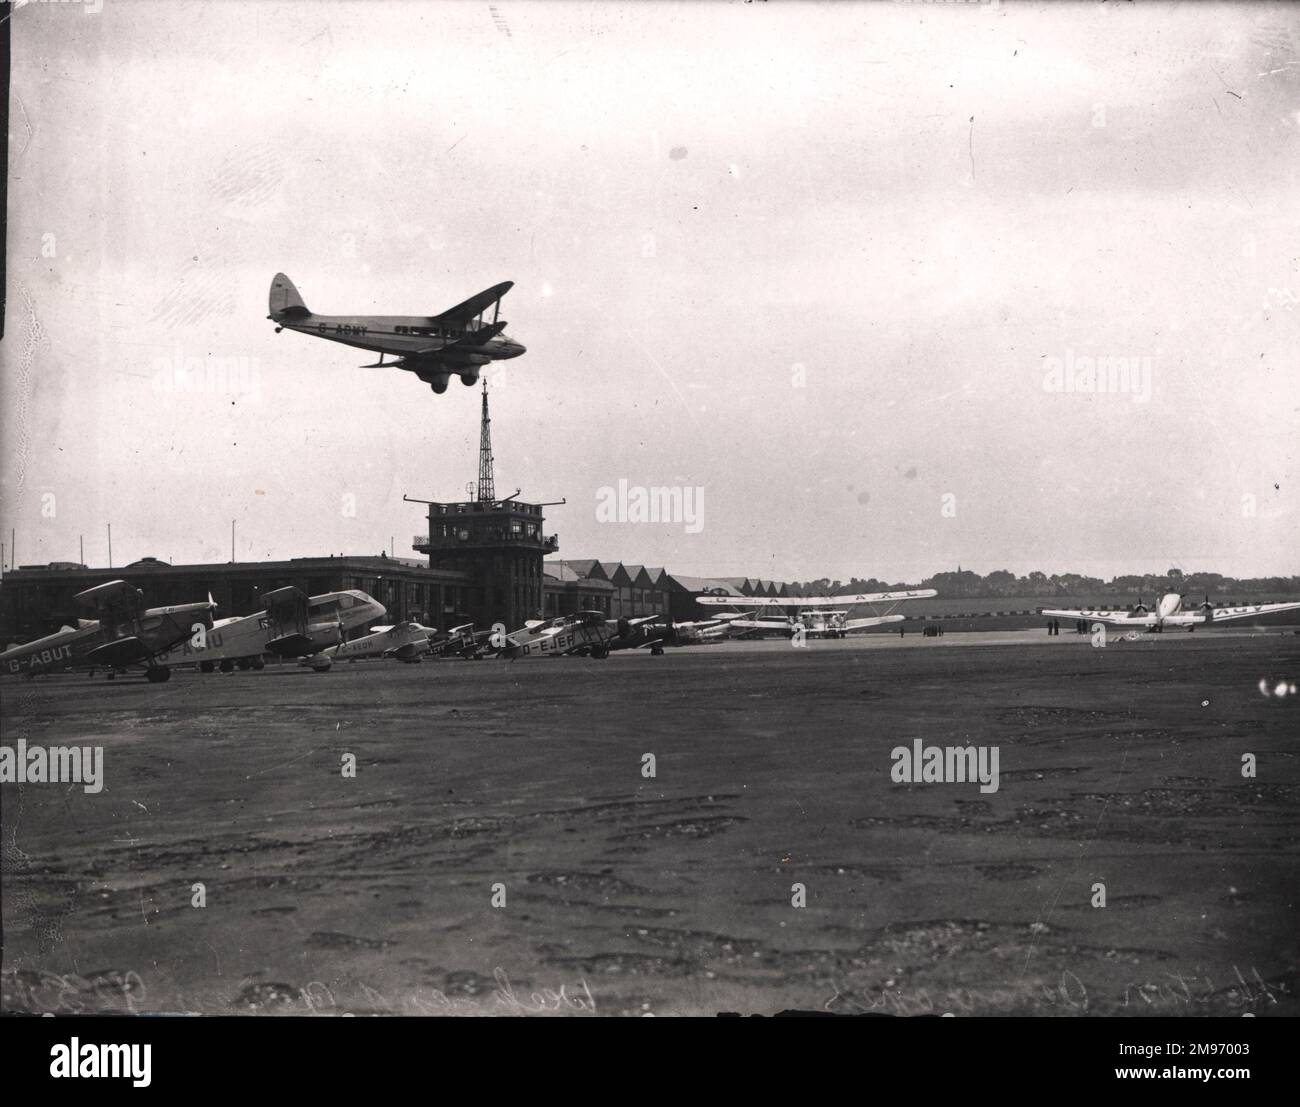 A de Havilland DH86, G-ADMY, arriva a terra all'aeroporto di Croydon. Tra gli aerei già a terra ci sono: De Havilland DH83 Fox Moth, G-ABUT; de Havilland DH84 Dragon i, G-ACIU; de Havilland DH90 Dragonfly, G-AEDH; de Havilland DH83 Fox Moth, G-ACFF; Handley Page HP42W, G-AAAXC e Junkers Ju52/3m, OO-AGV, di Sabena. Foto Stock